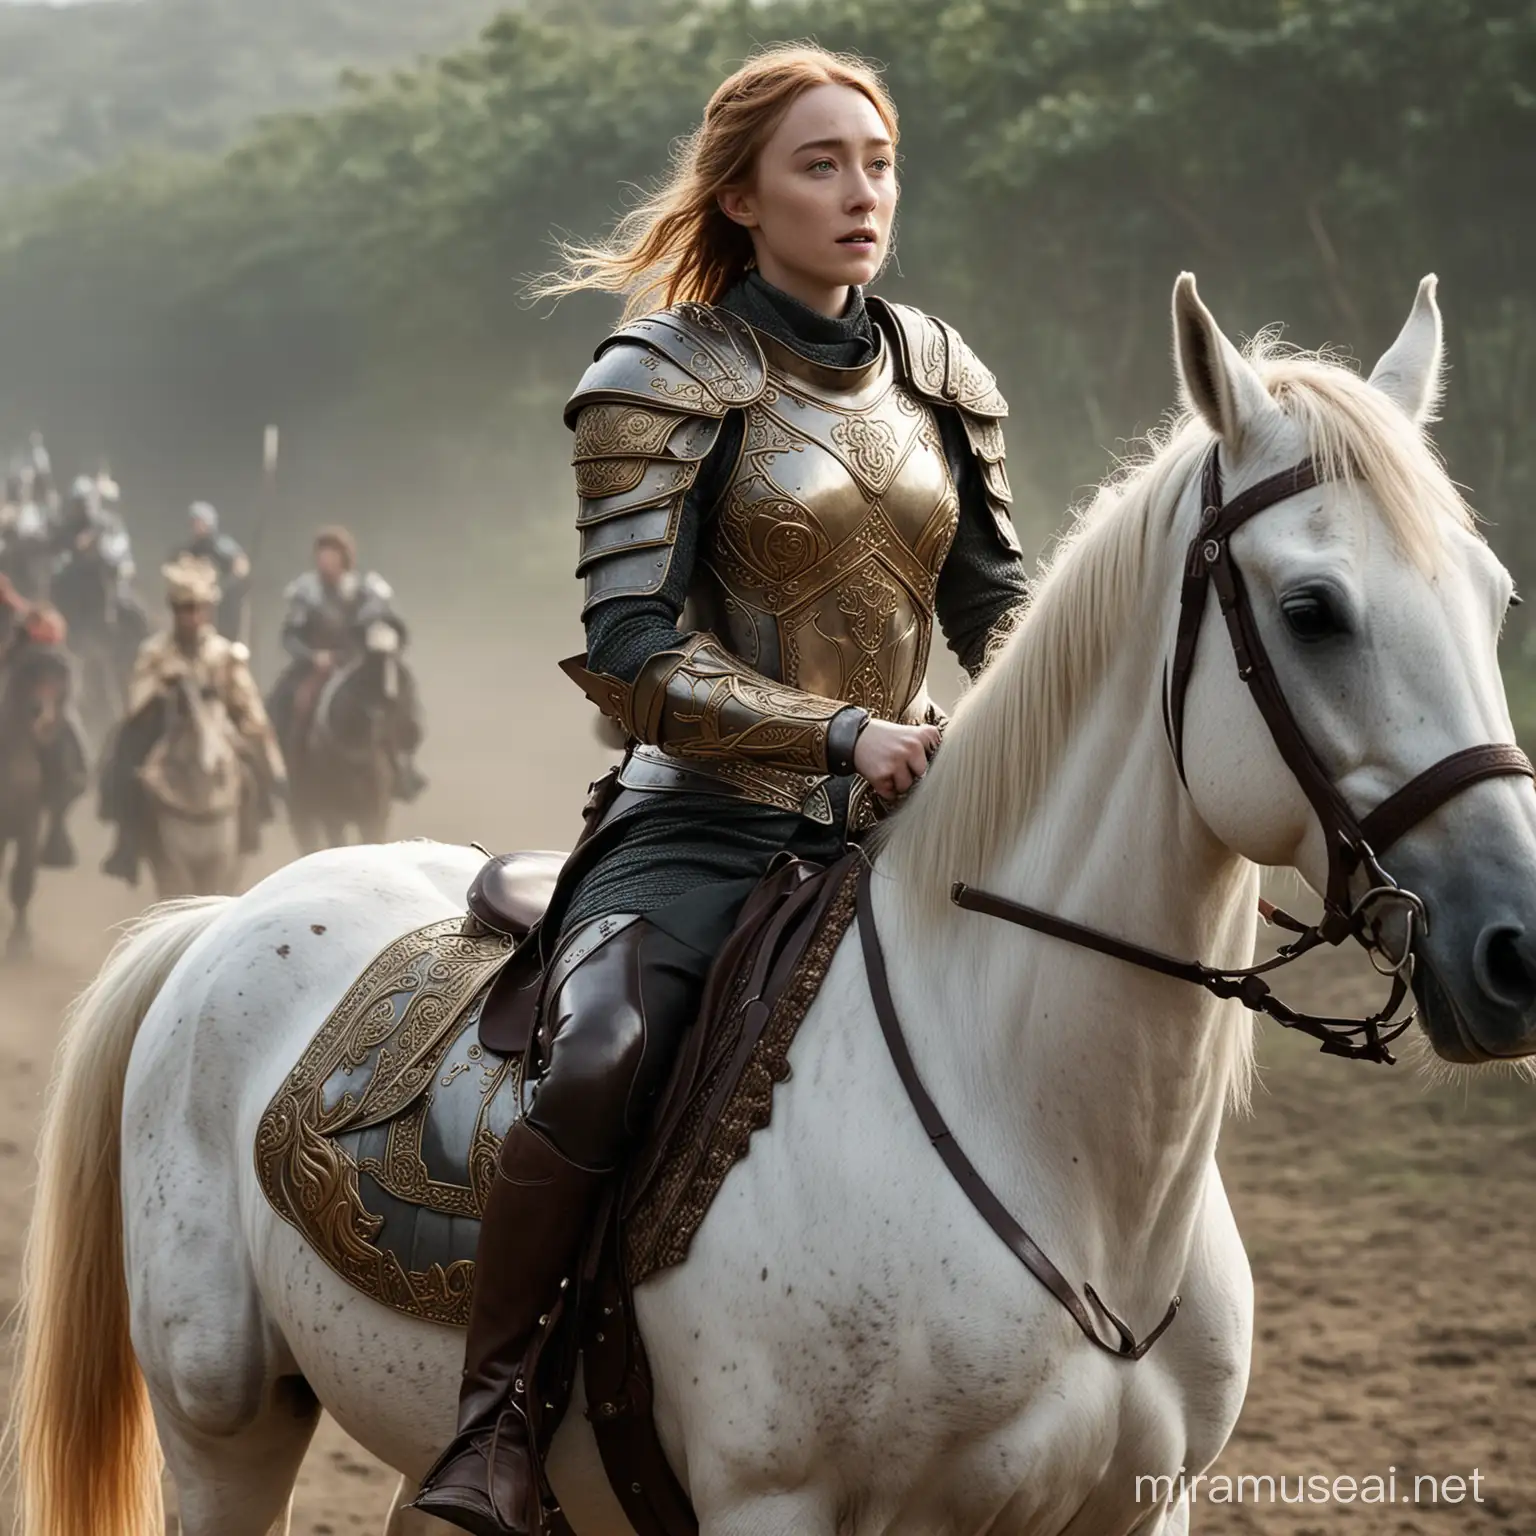 Saoirse Ronan wearing inalid paladin armor riding a horse into a battle